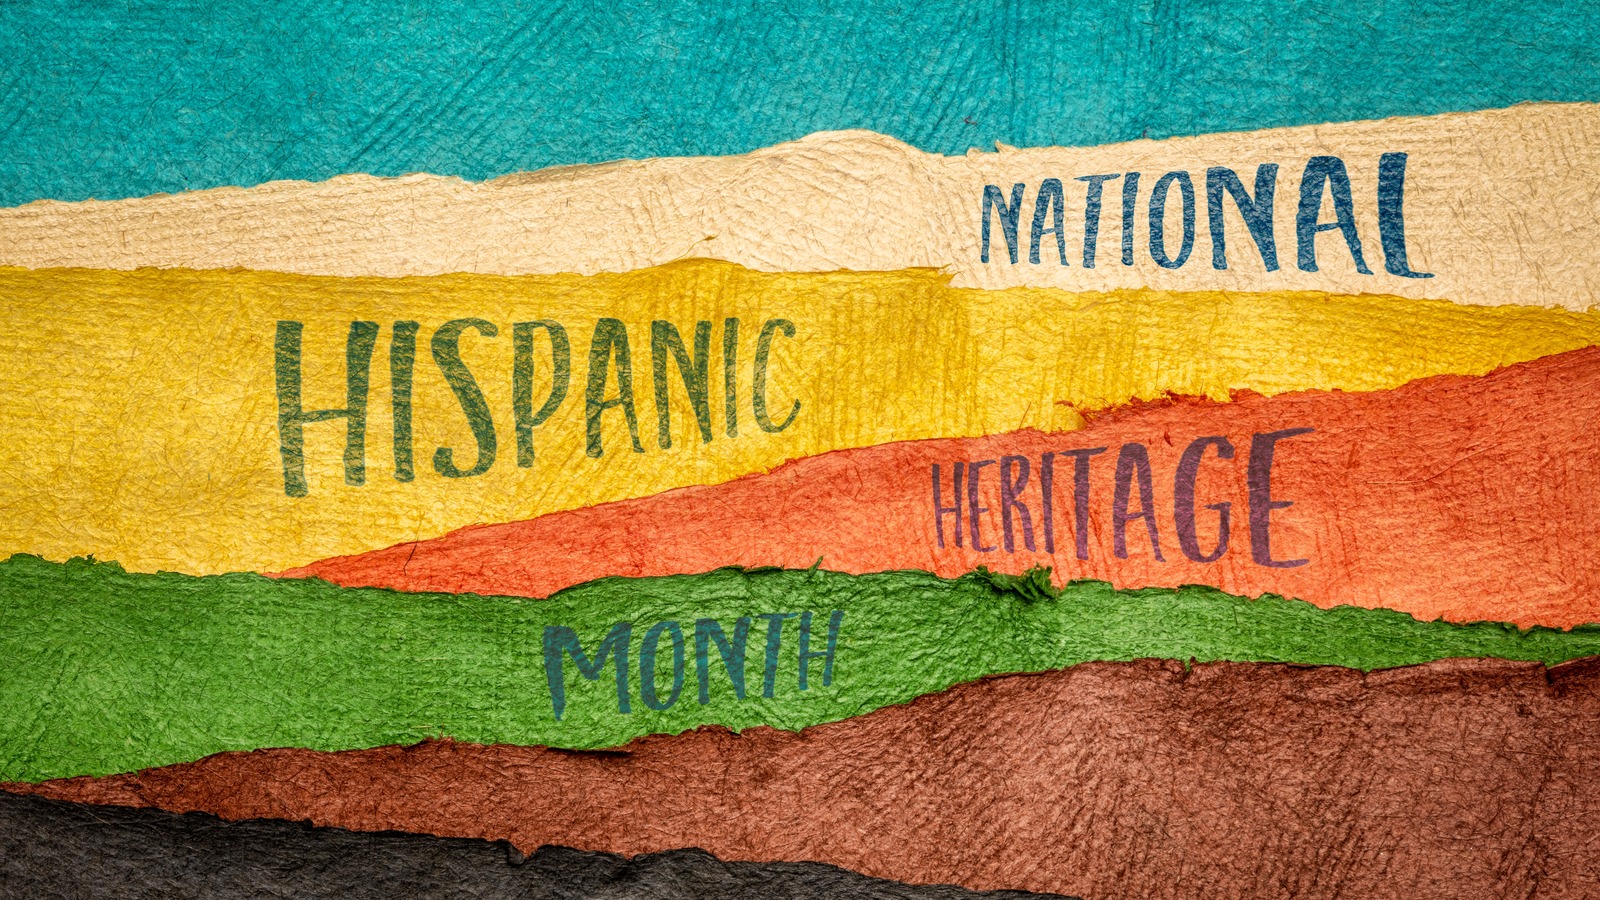 The Origins Of Hispanic Heritage Month Explained – Grunge